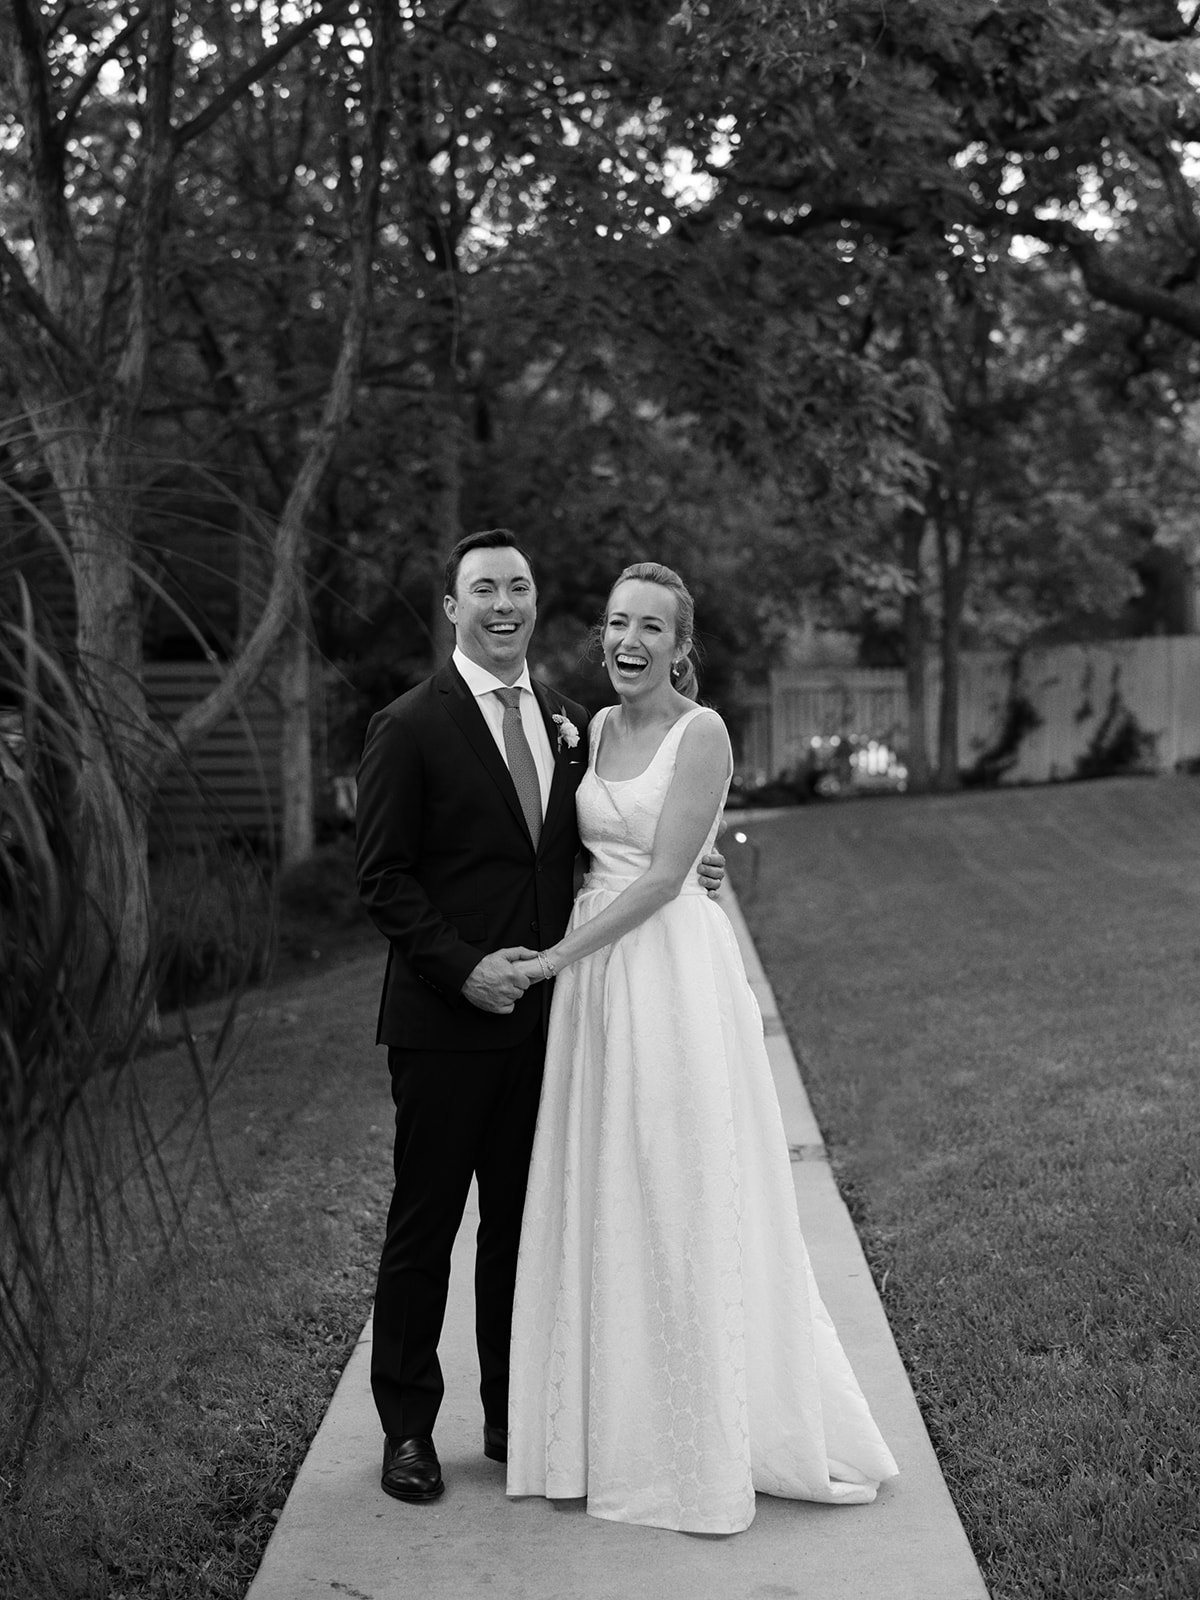 Best-Austin-Wedding-Photographers-Elopement-Film-35mm-Asheville-Santa-Barbara-Hotel-Saint-Cecilia-108.jpg